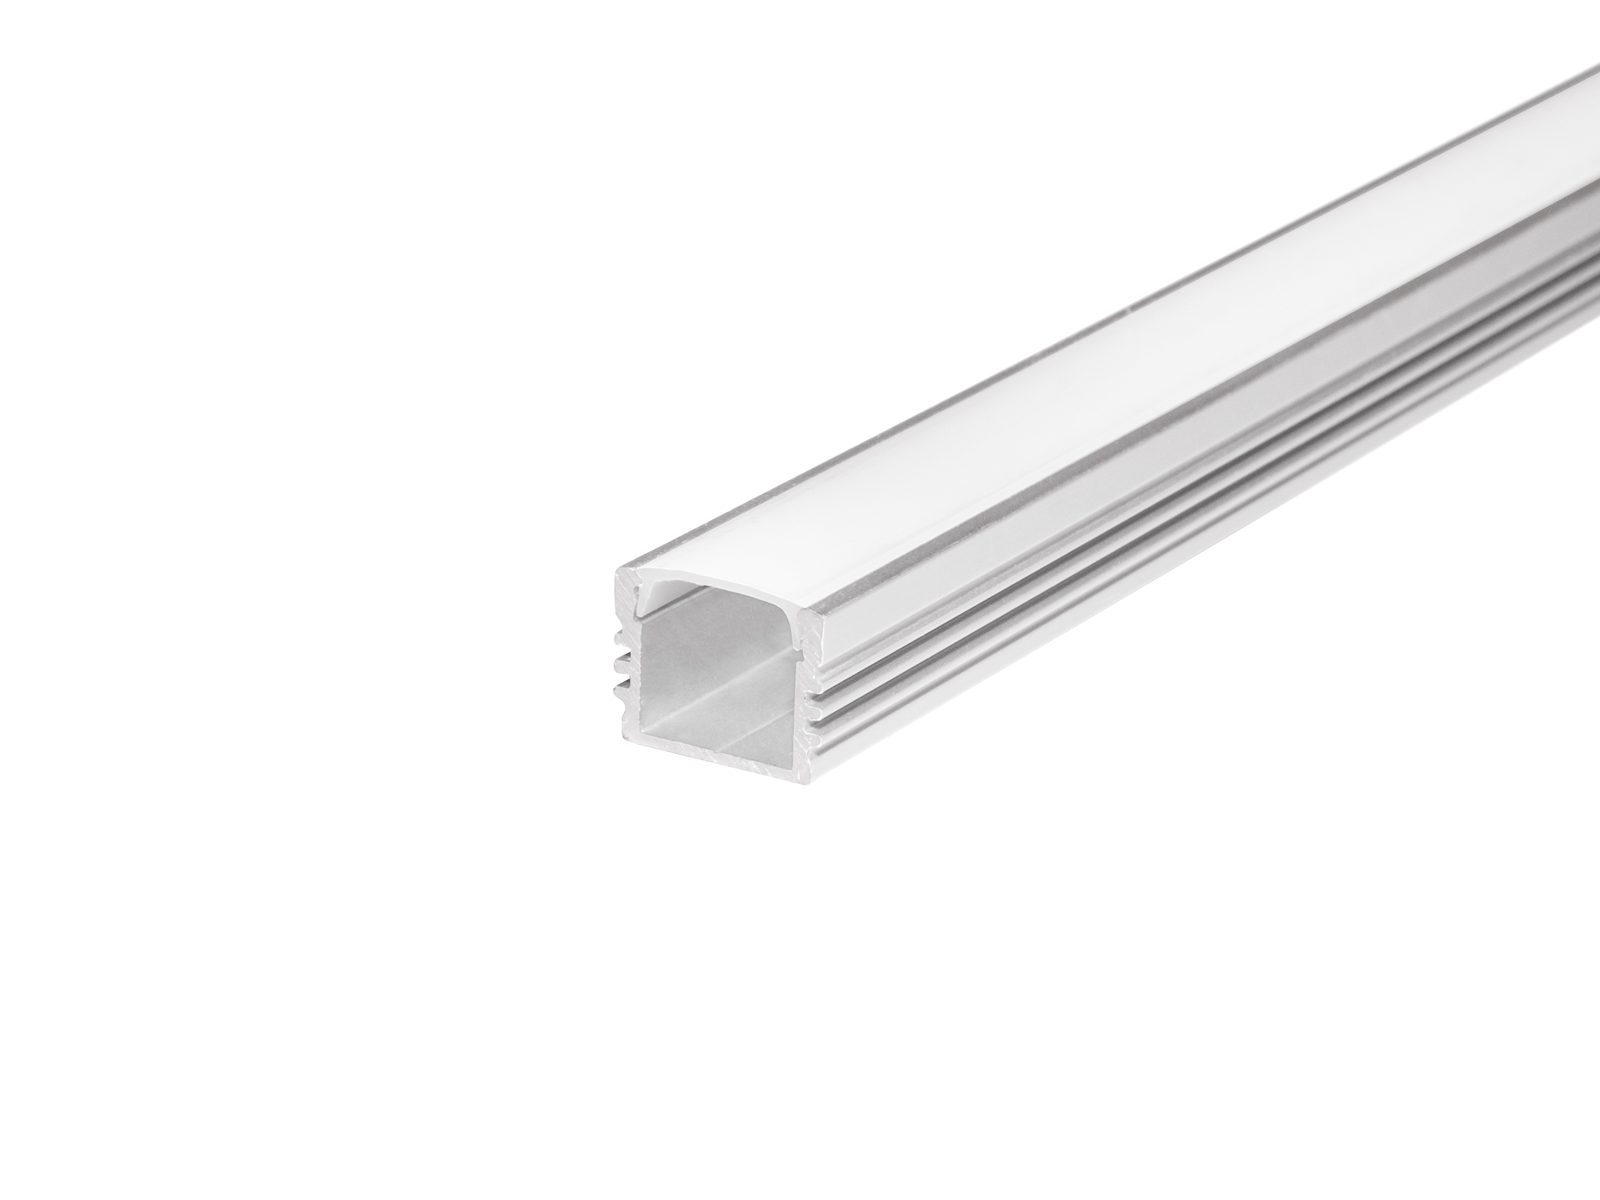 LED Profil AL-PU10 silber mit opalweißer Abdeckung flach 2m kaufen